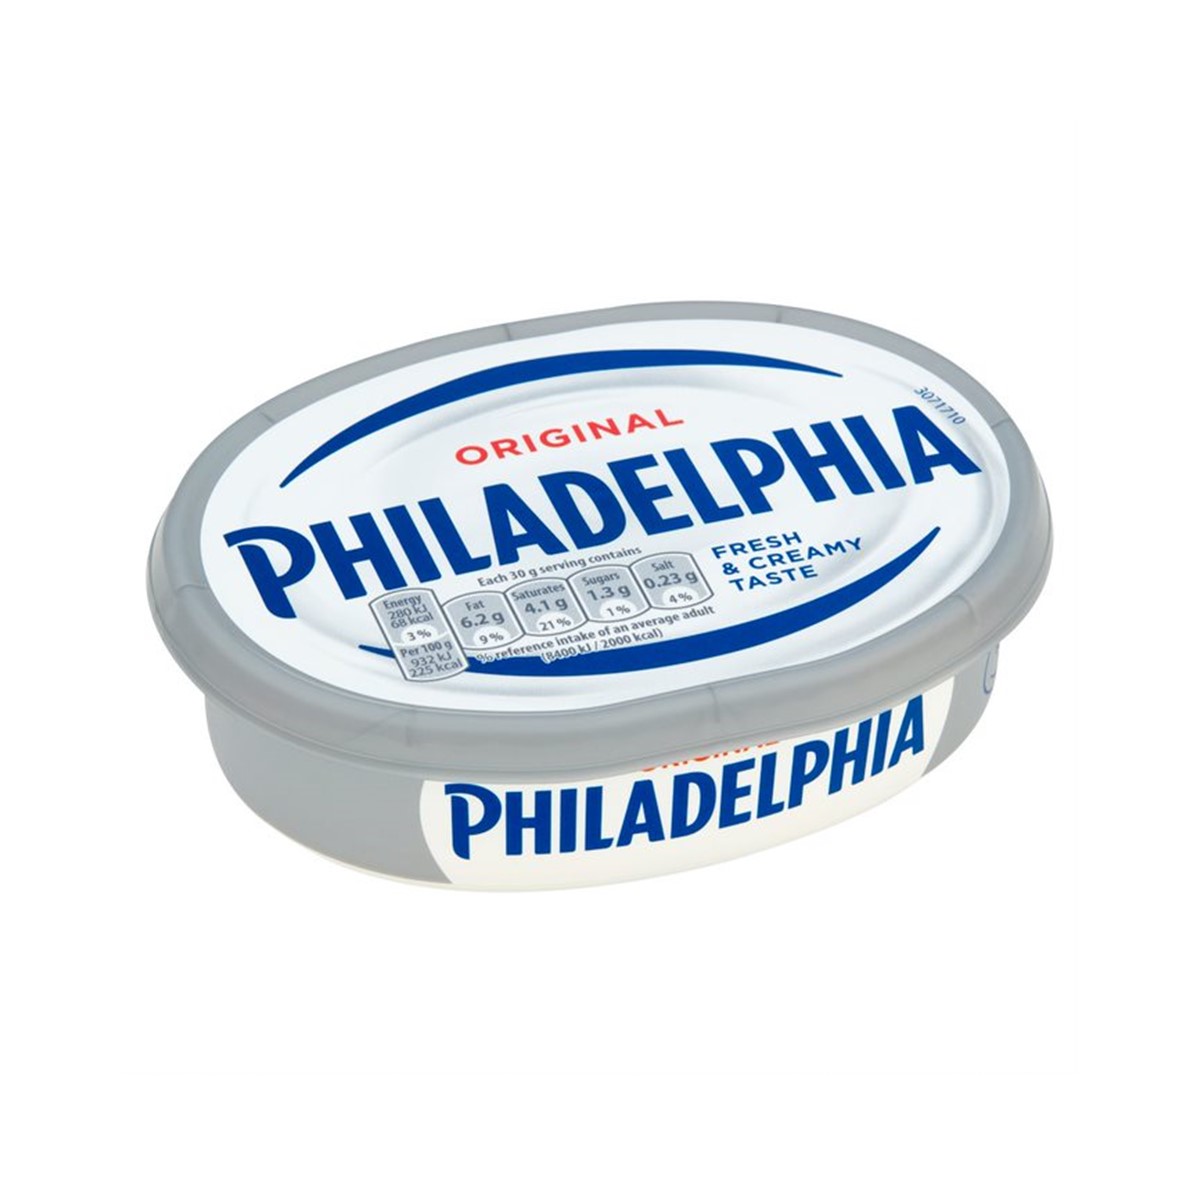 Philadelphia ORIGINAL - 180g tub